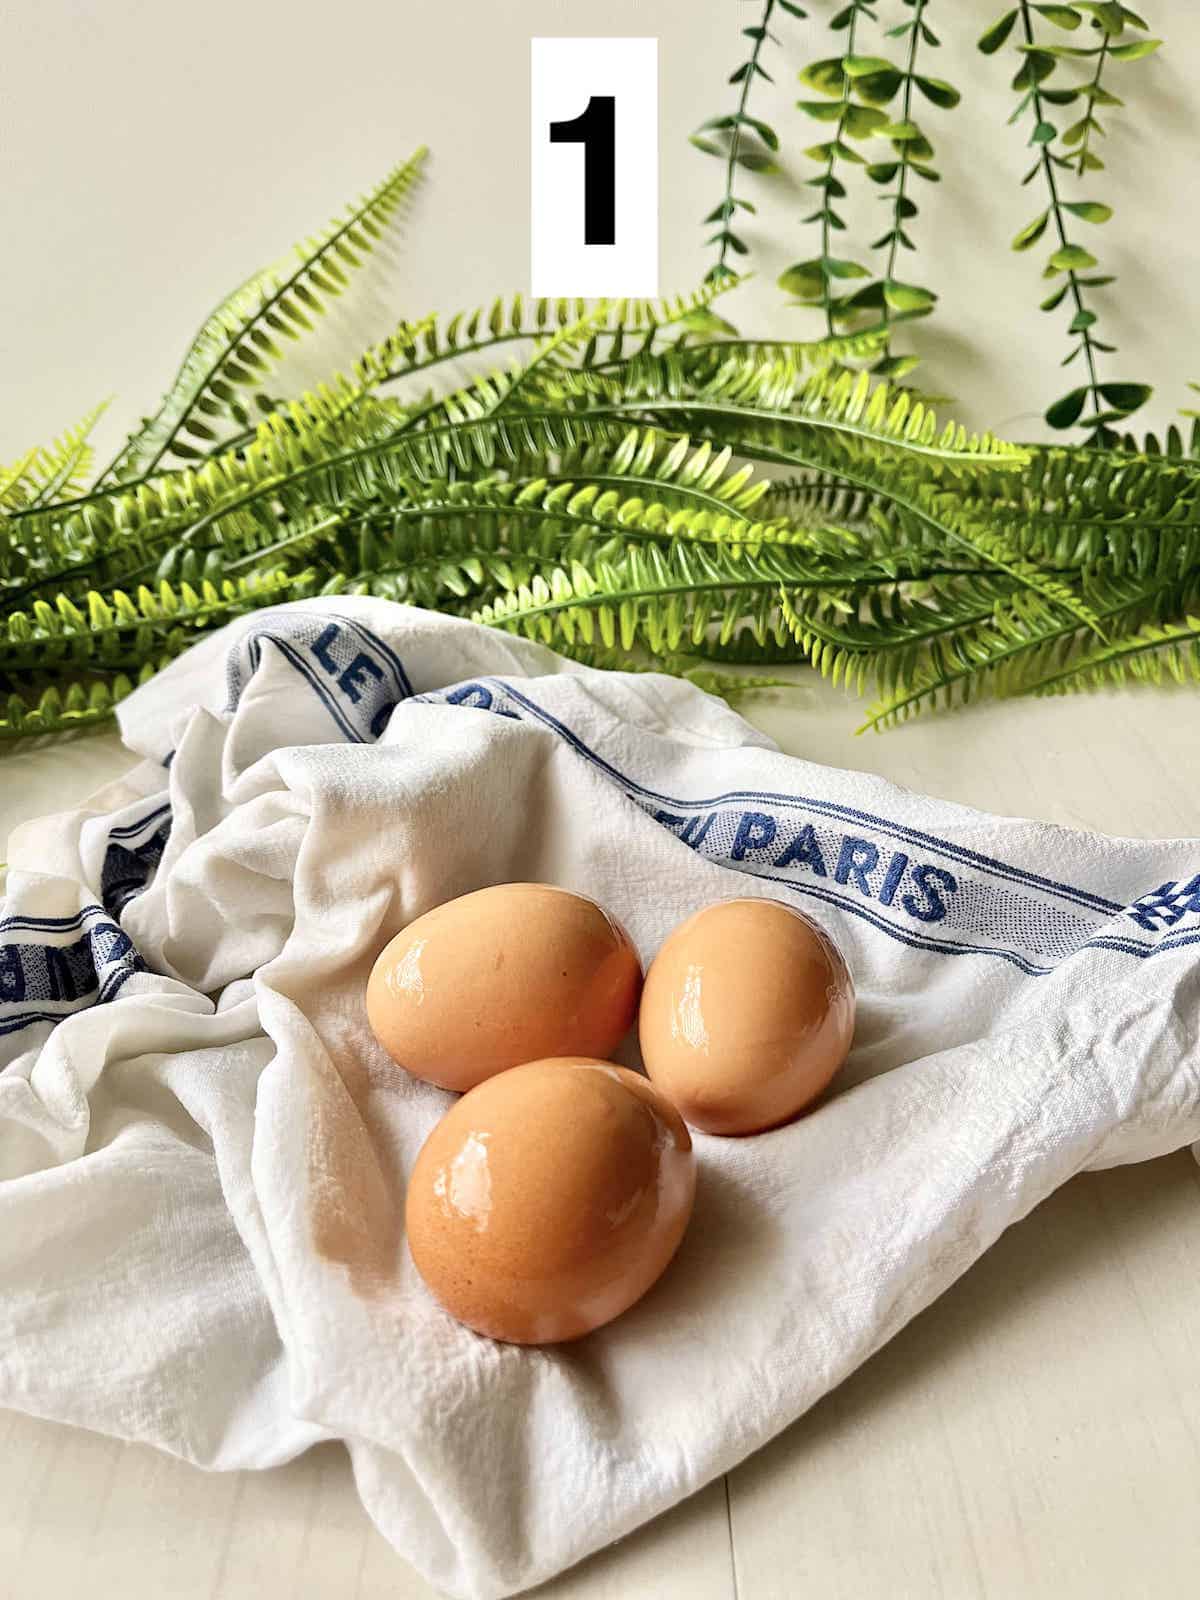 Wet eggs on a Le Creuset tea towel.